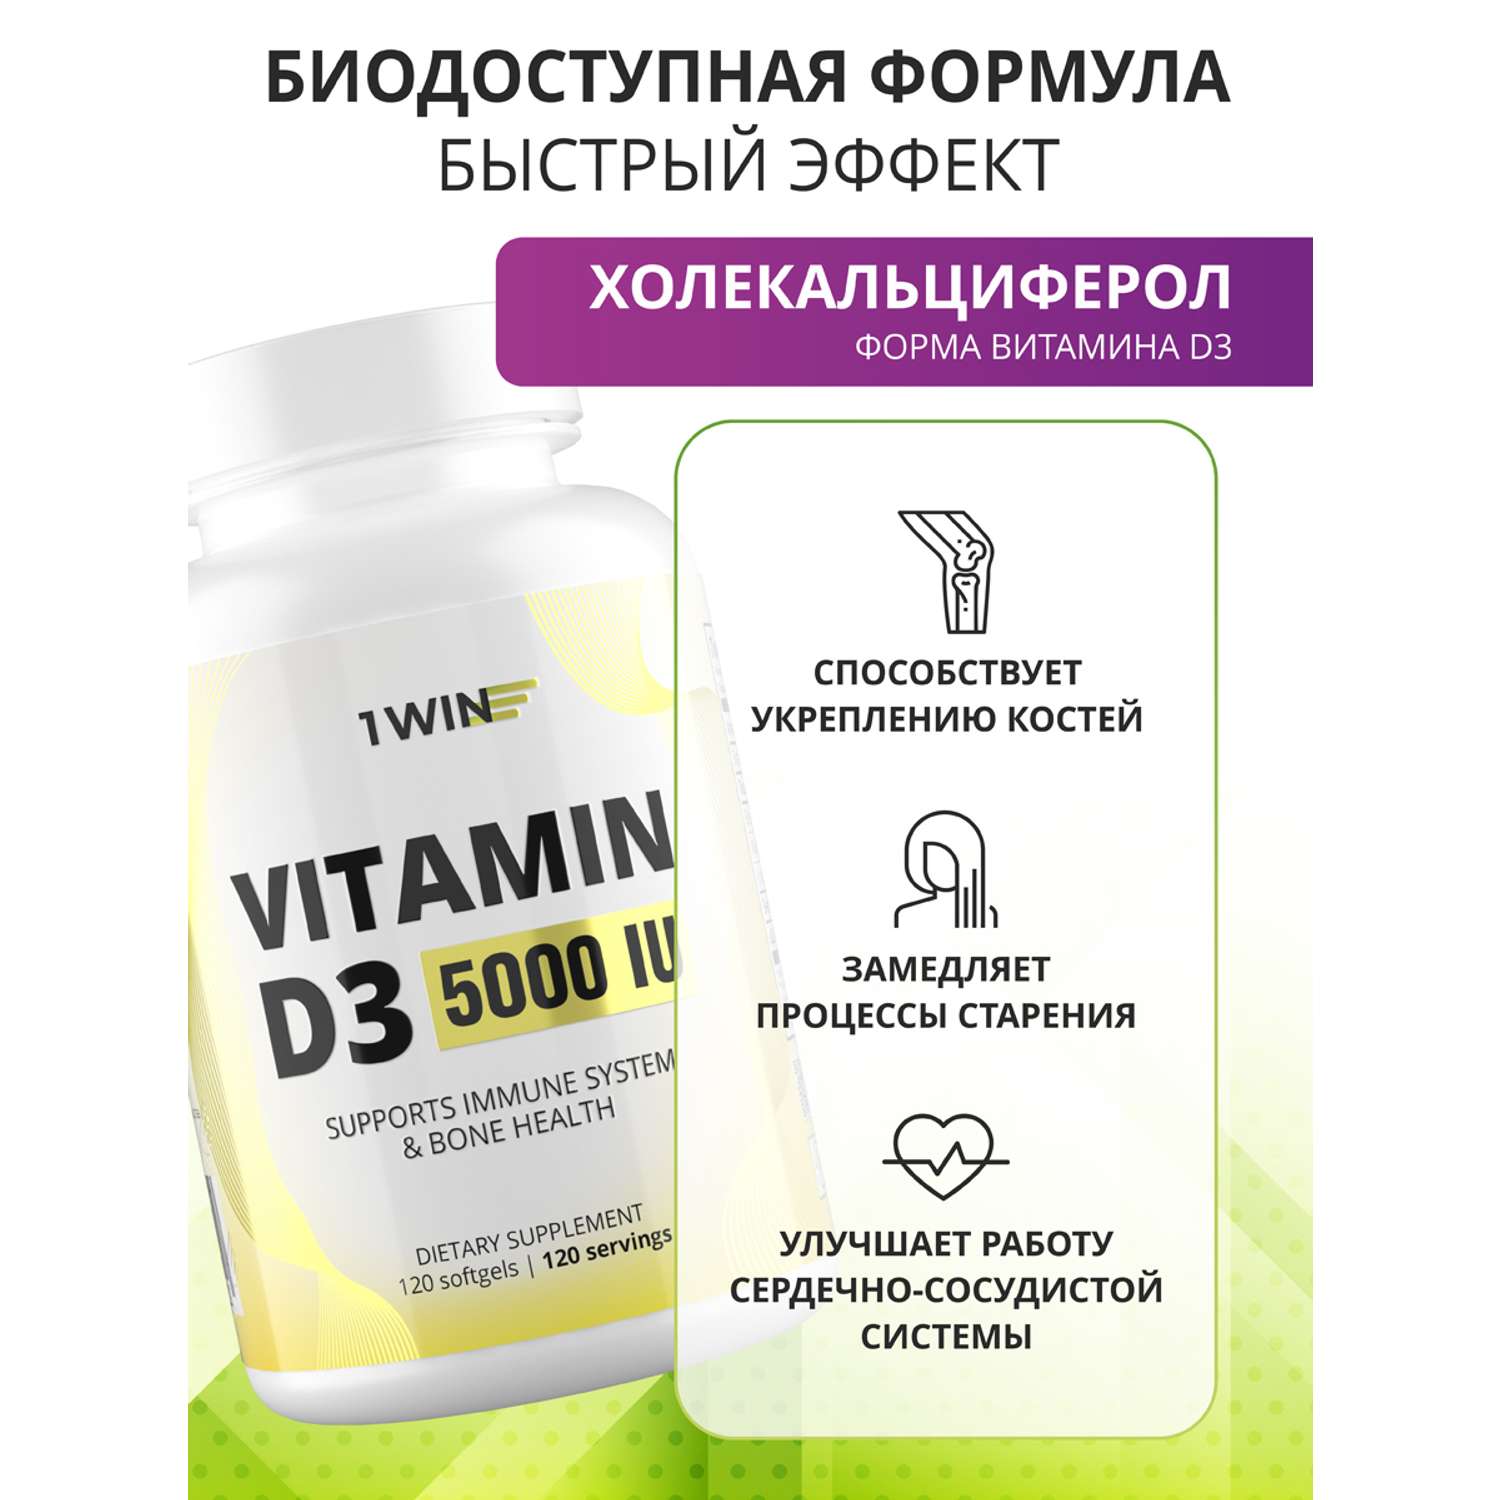 Витамин Д3 1WIN 5000 МЕ 120 капсул - фото 3